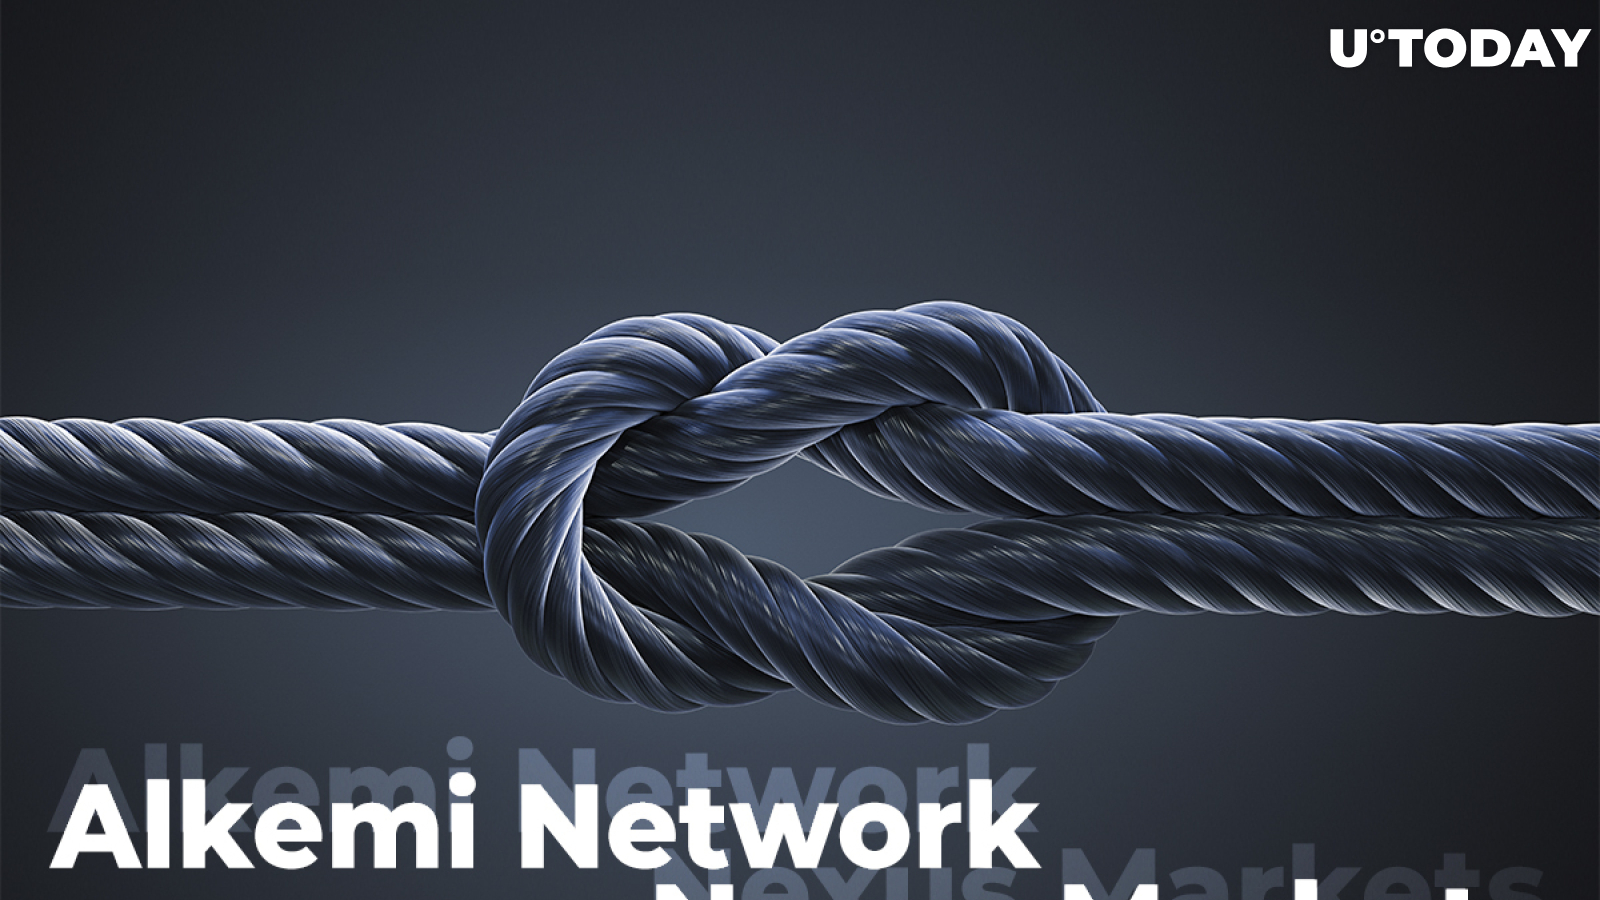 Alkemi Network Partners with Nexus Markets for Advanced DeFi Yields